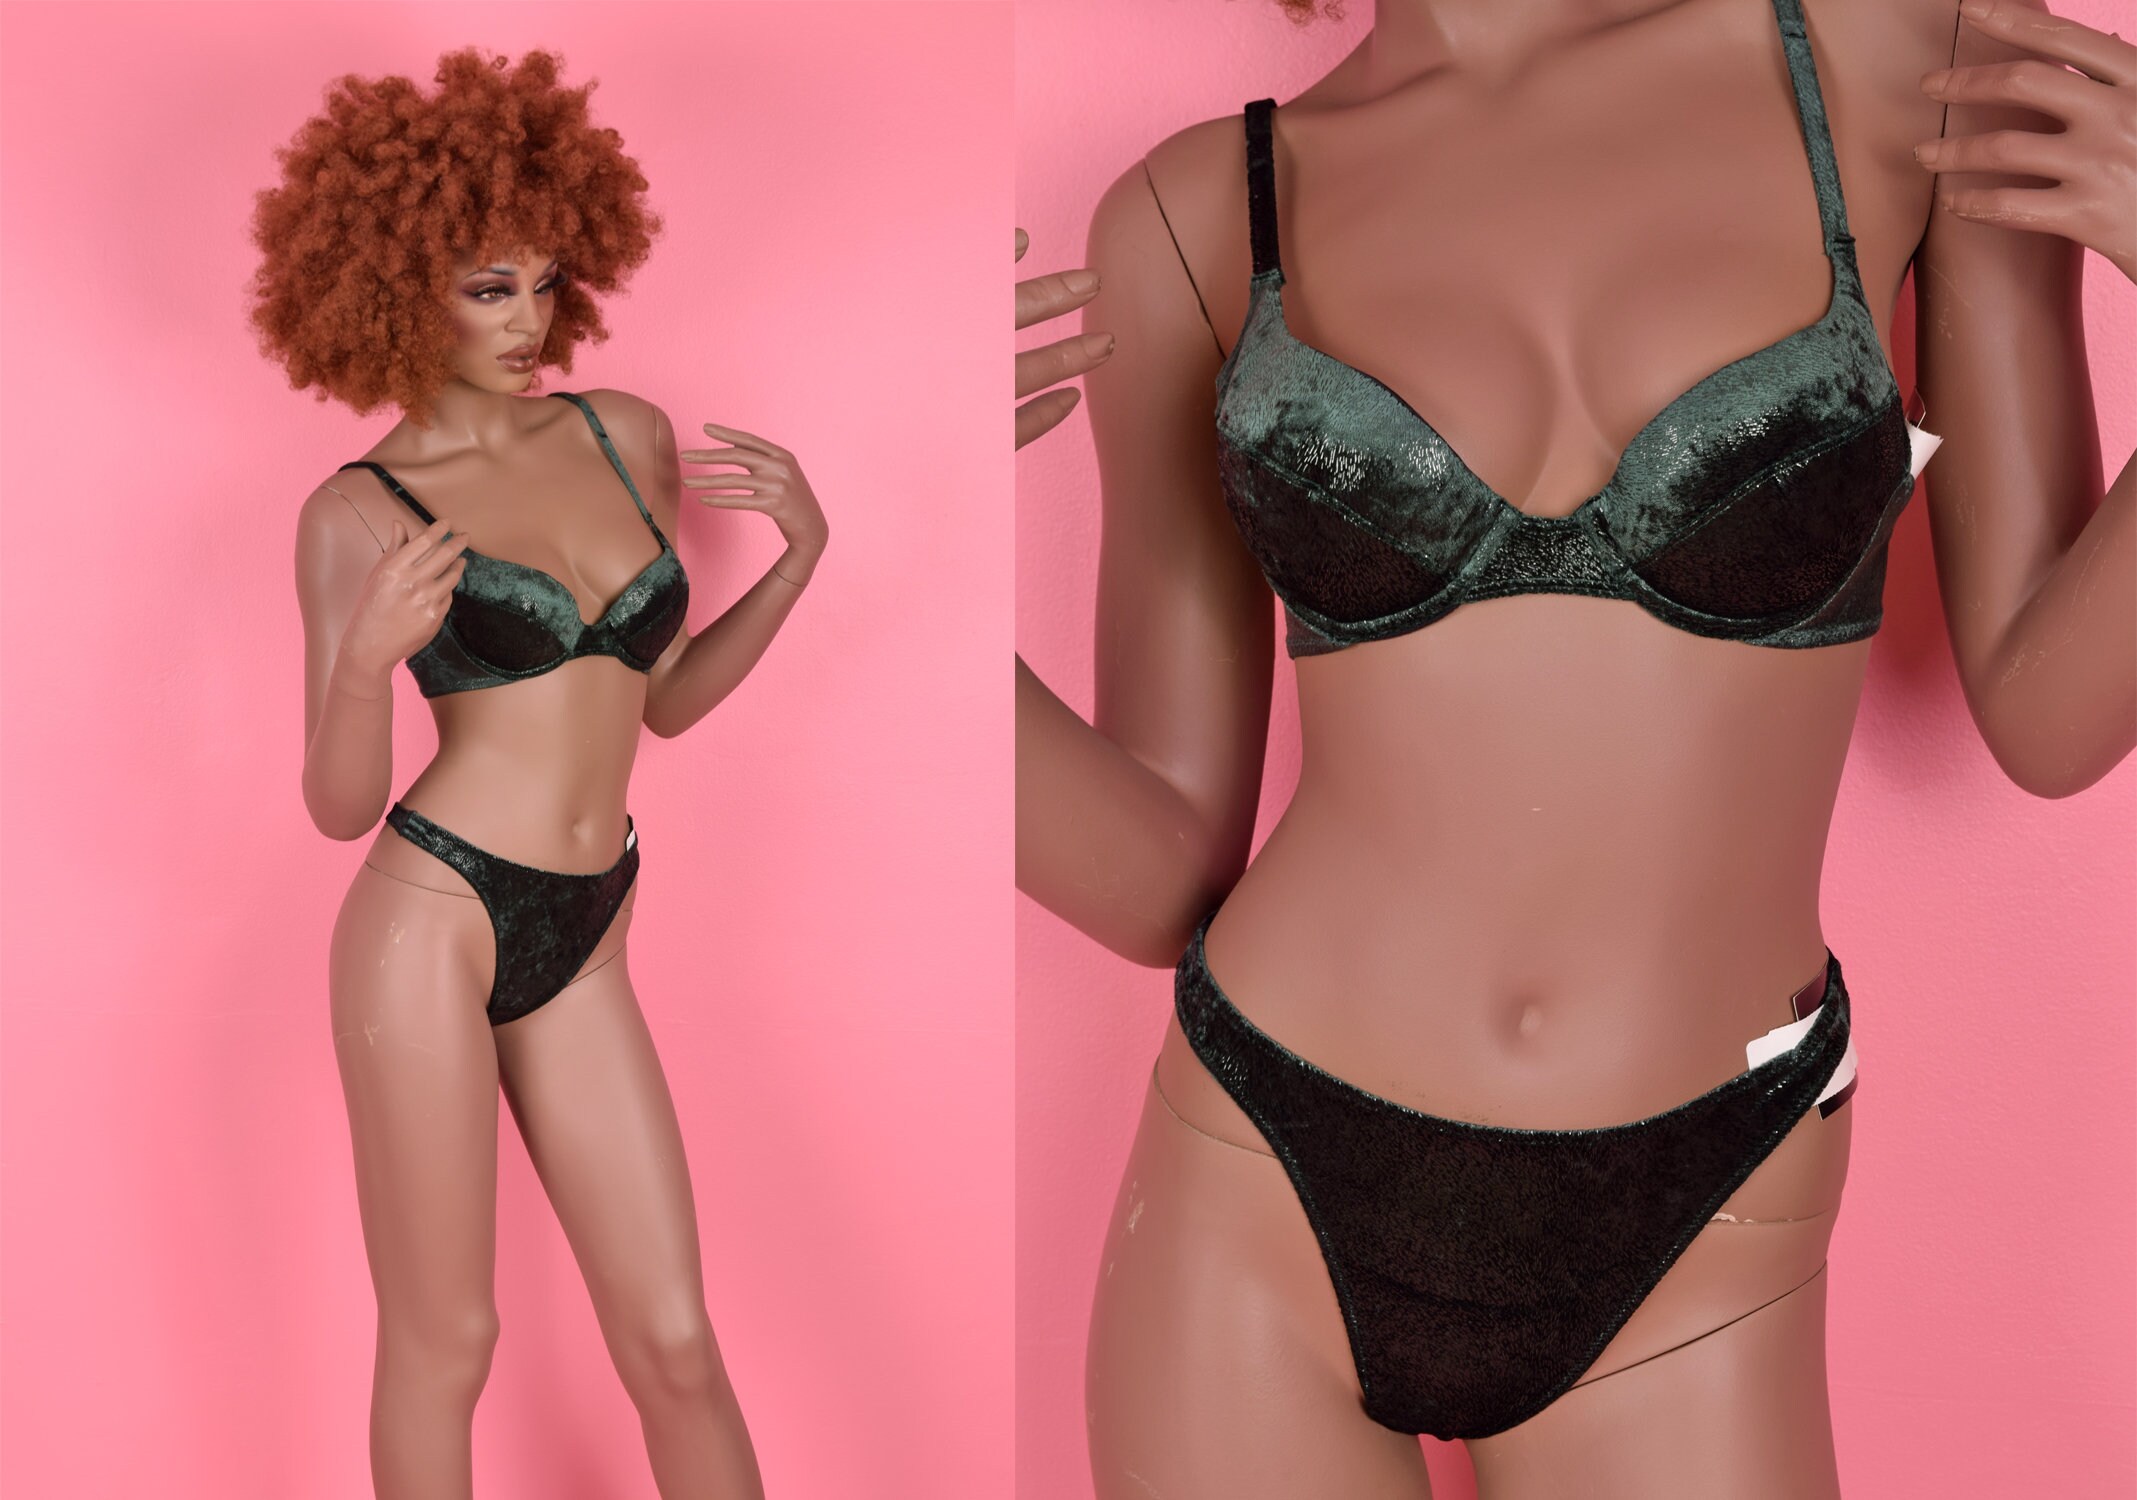 Buy KE FAB Sexy Bra & Panty Set Self Design Lingerie Set (34, Red) at